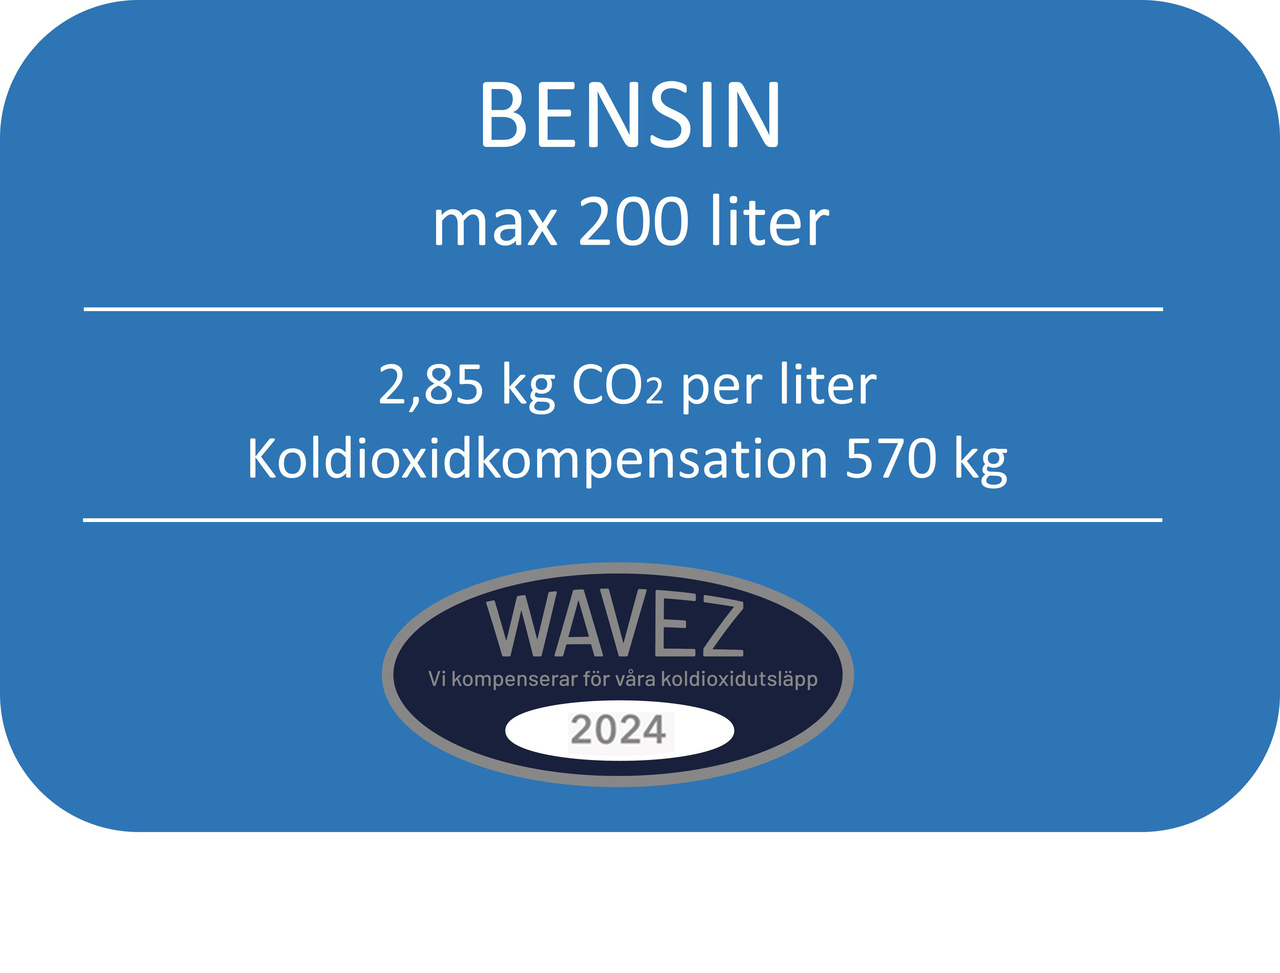 KOLDIOXIDKOMP FÖR 200L BENSIN -570KG CO2 WAVEZ